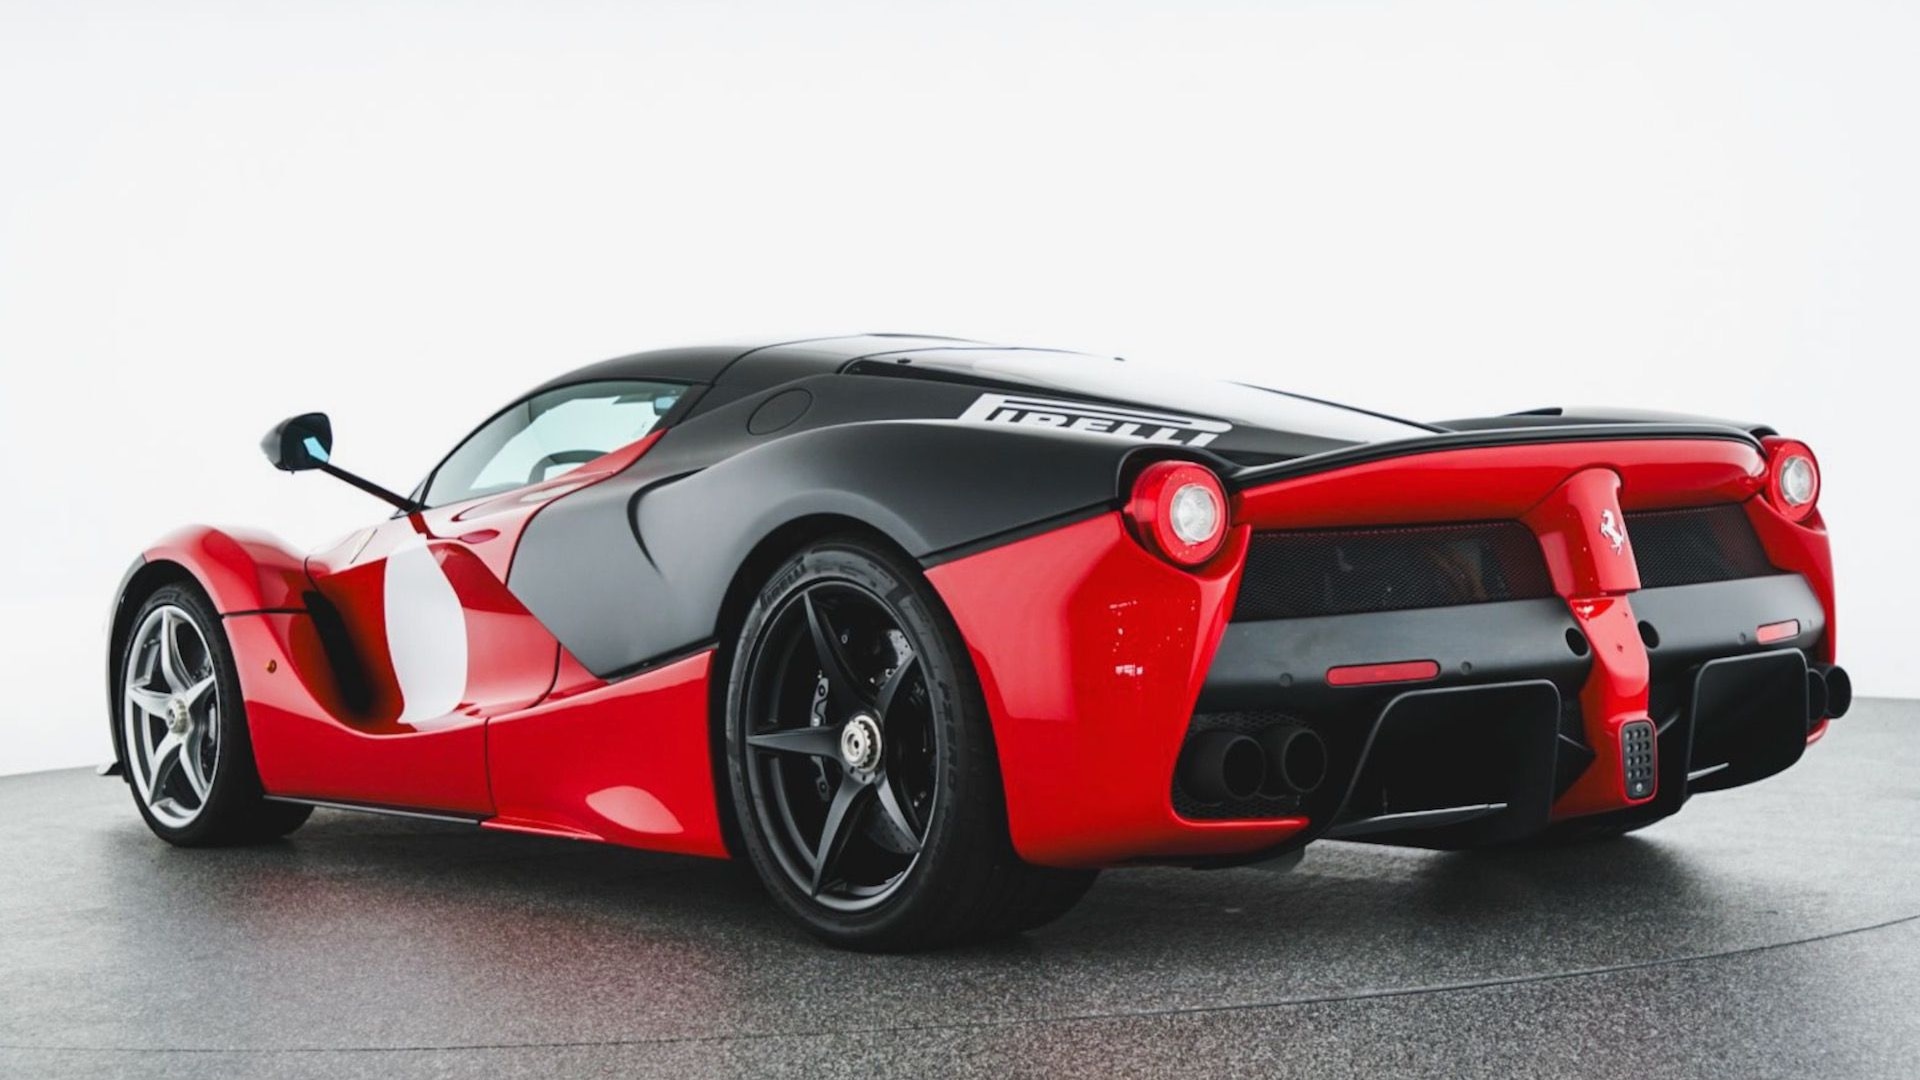 Ferrari LaFerrari prototype (image via @sbxcars)